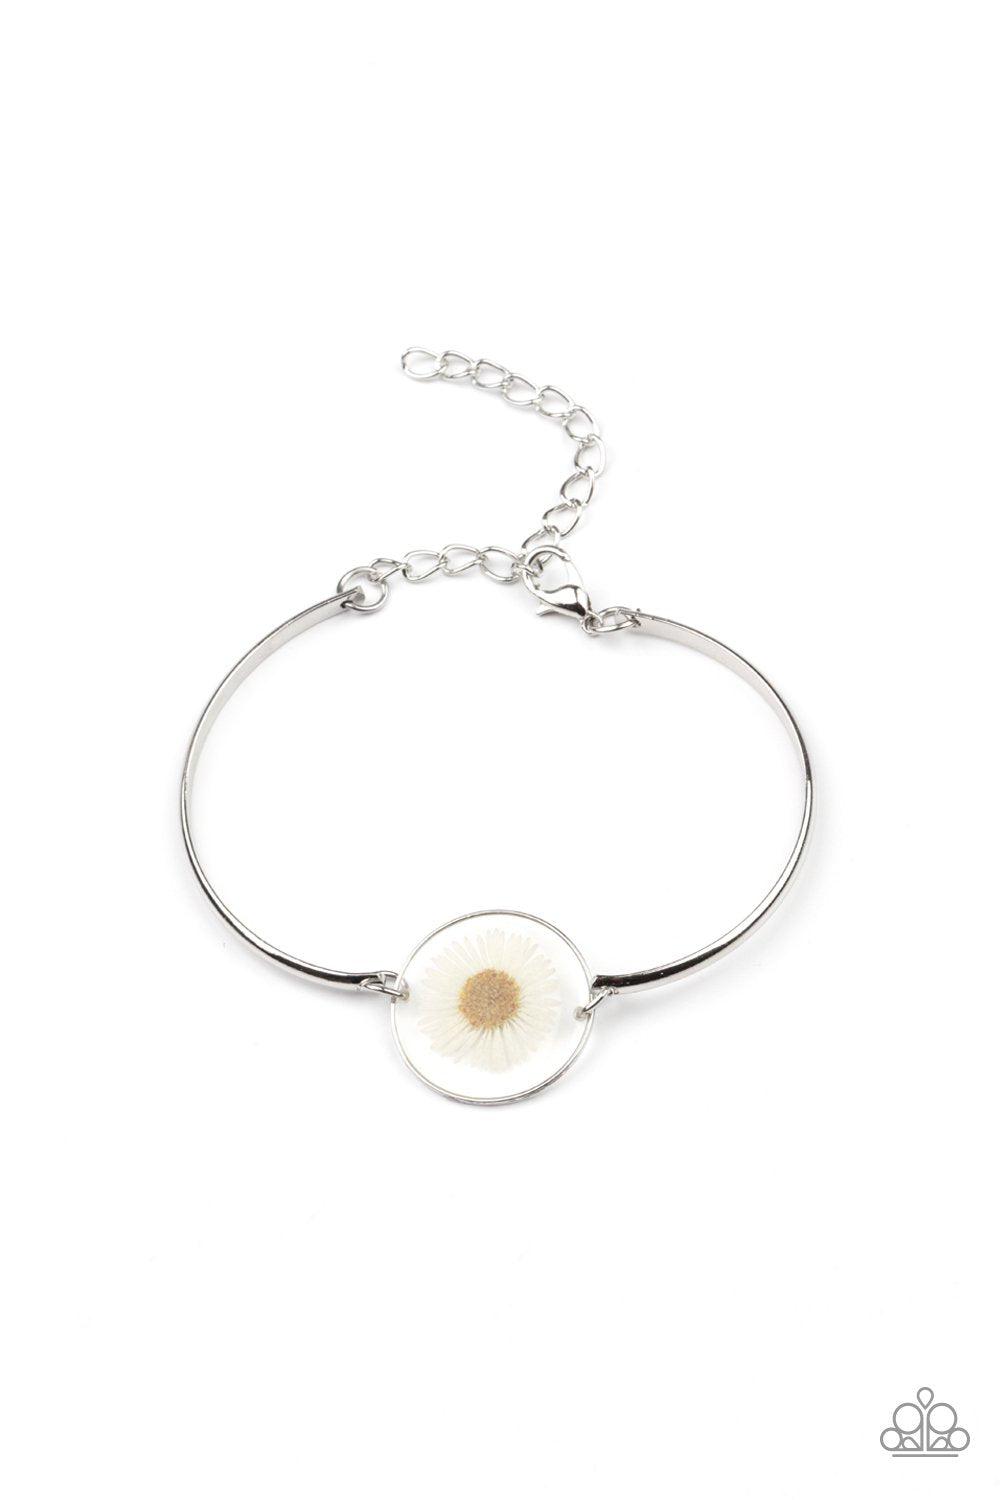 Cottage Season White Daisy Flower Bracelet - Paparazzi Accessories- lightbox - CarasShop.com - $5 Jewelry by Cara Jewels